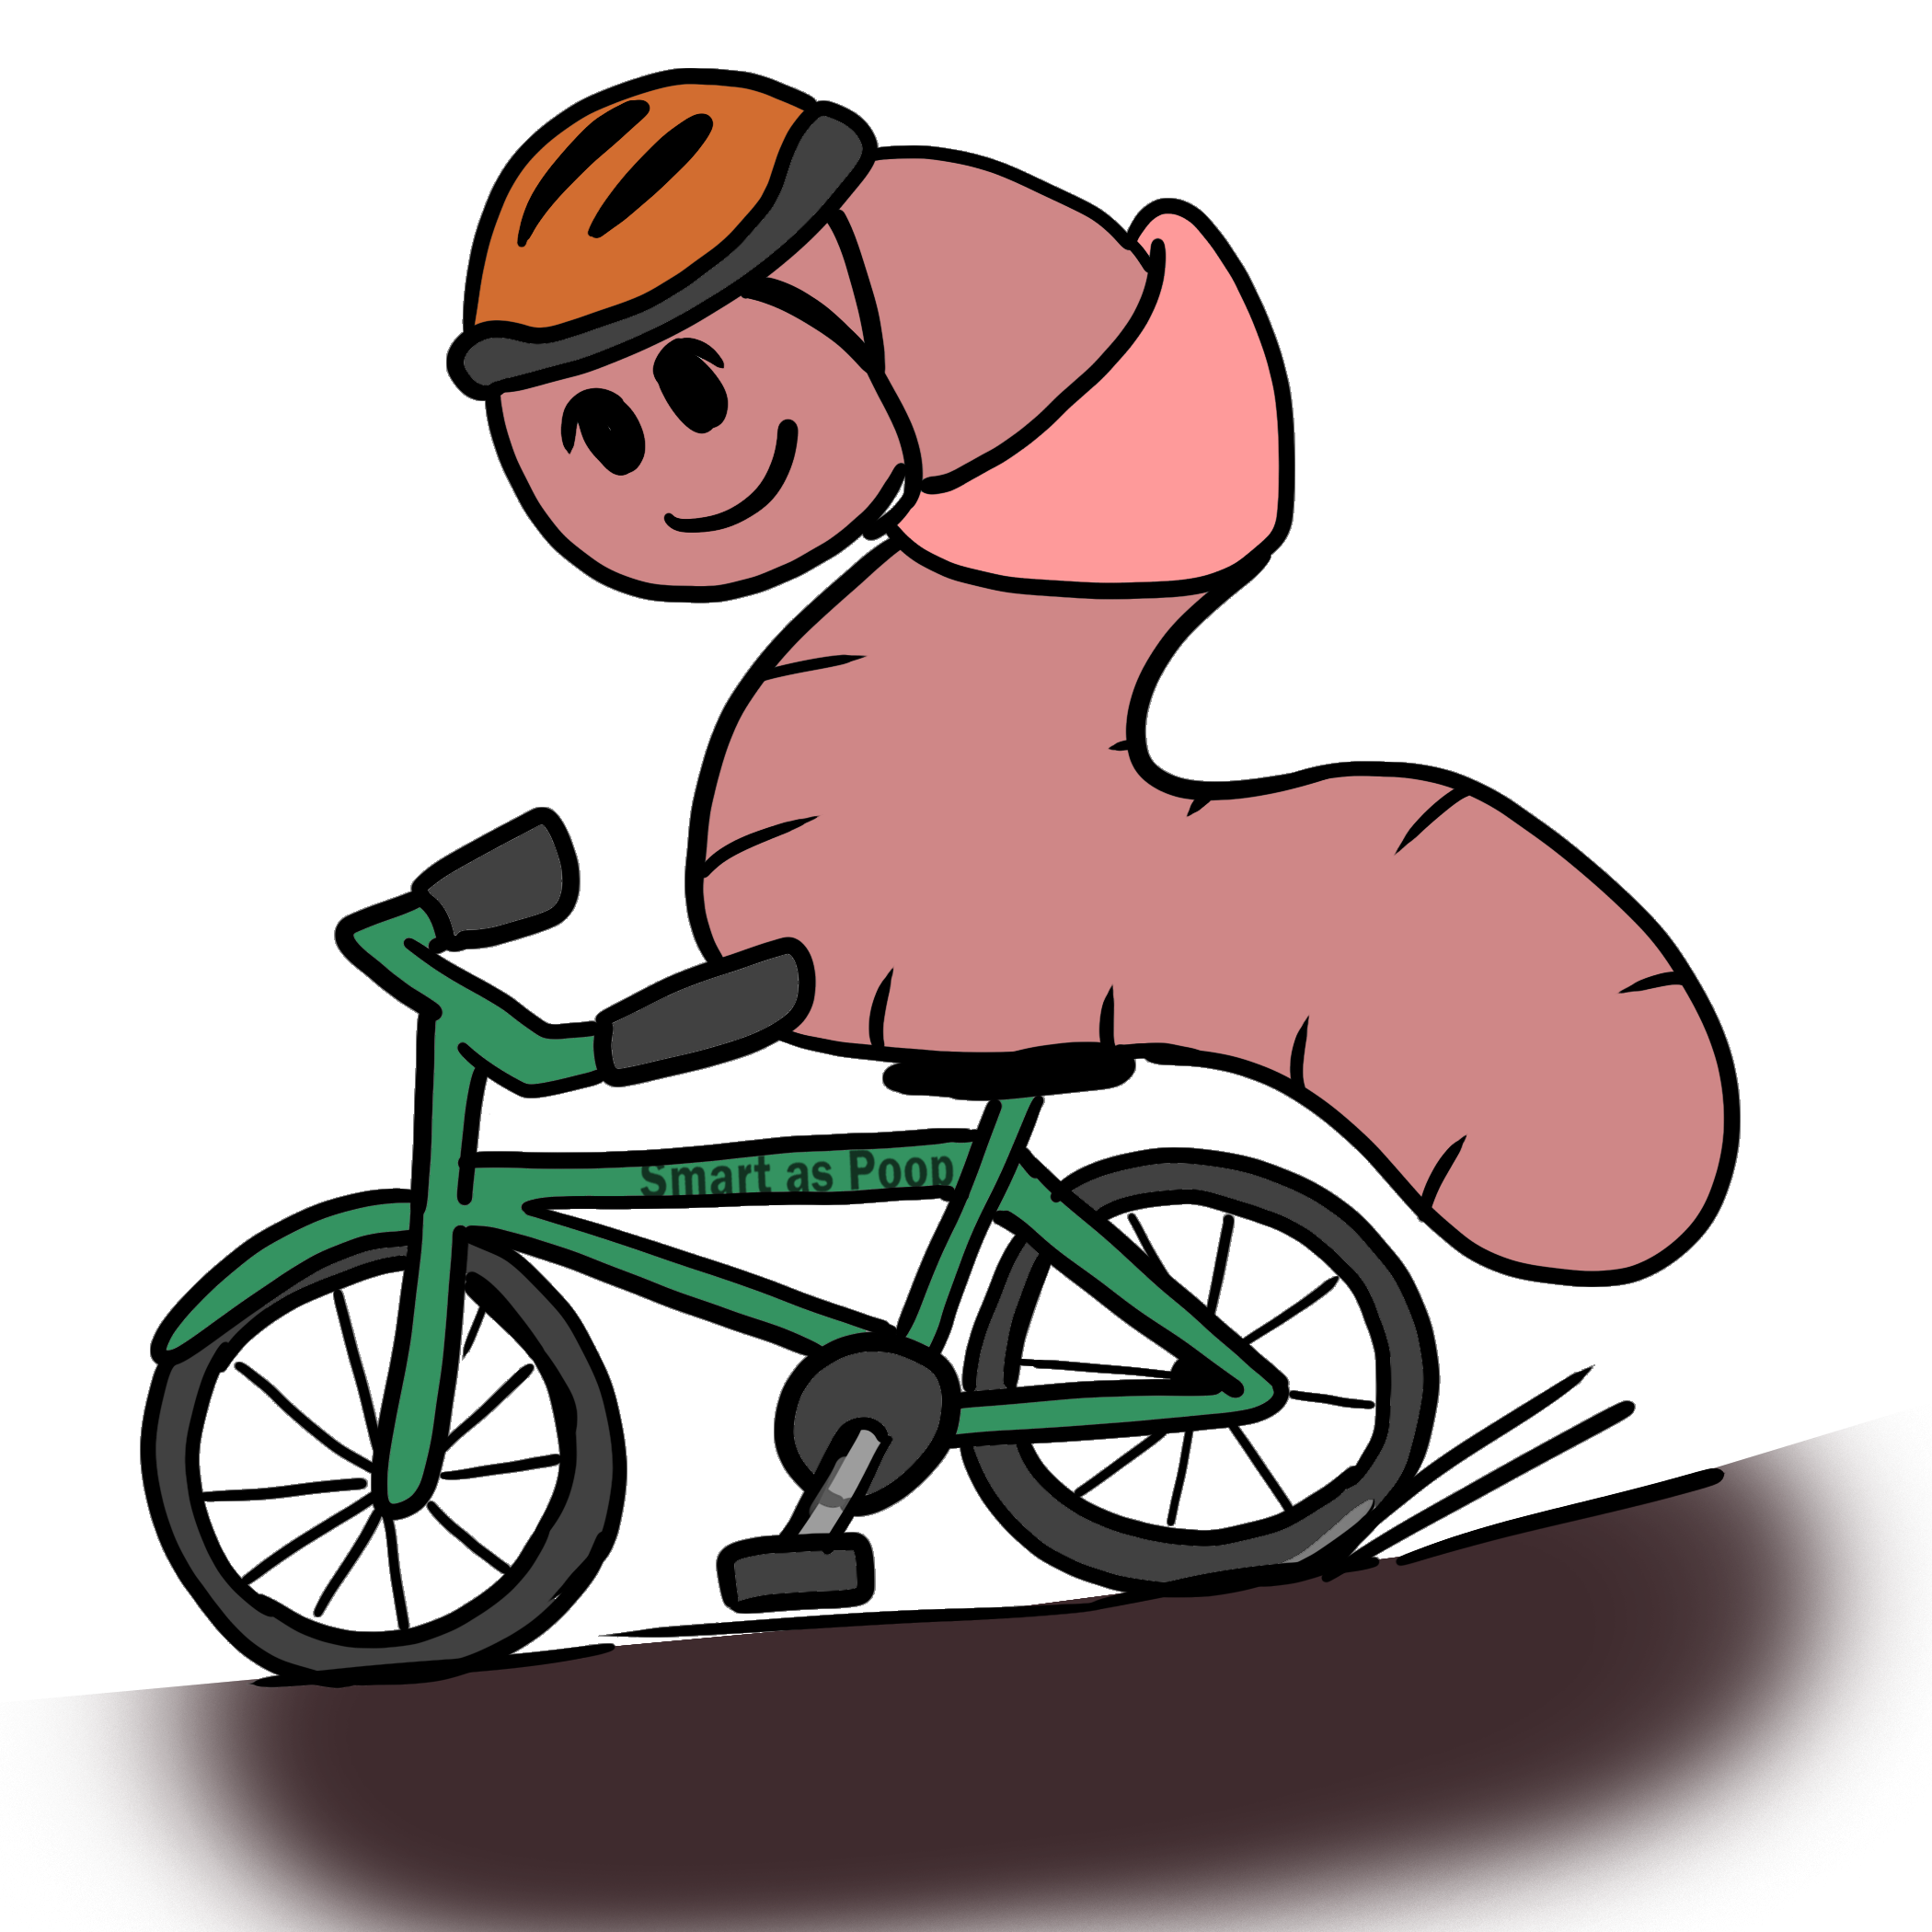 Cartoon worm riding a bike